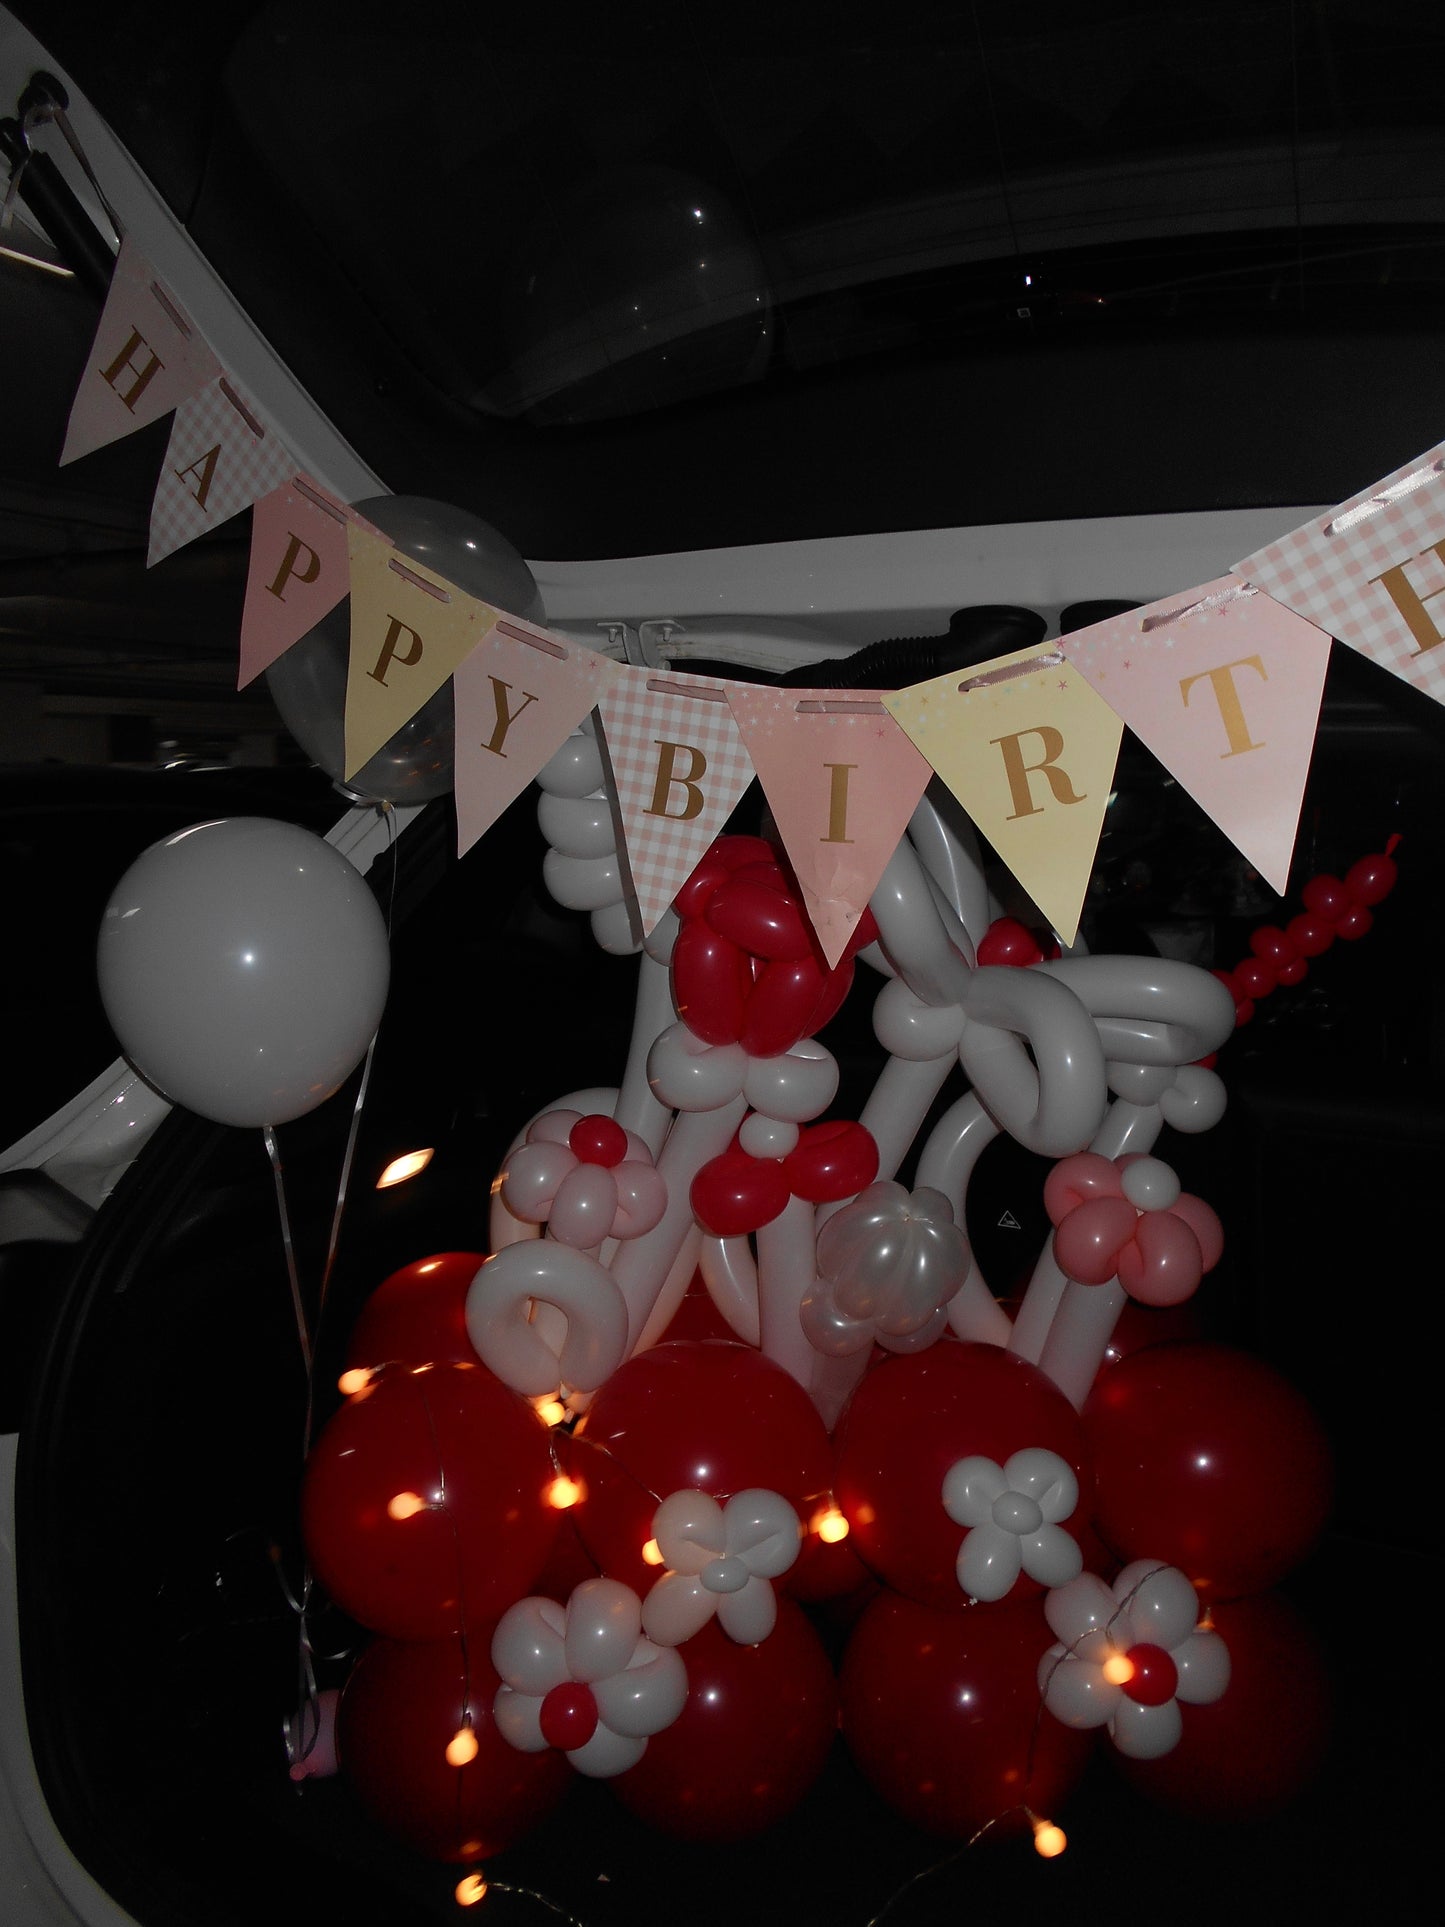 car boot surprise - white & red balloon flower bush & gift box set